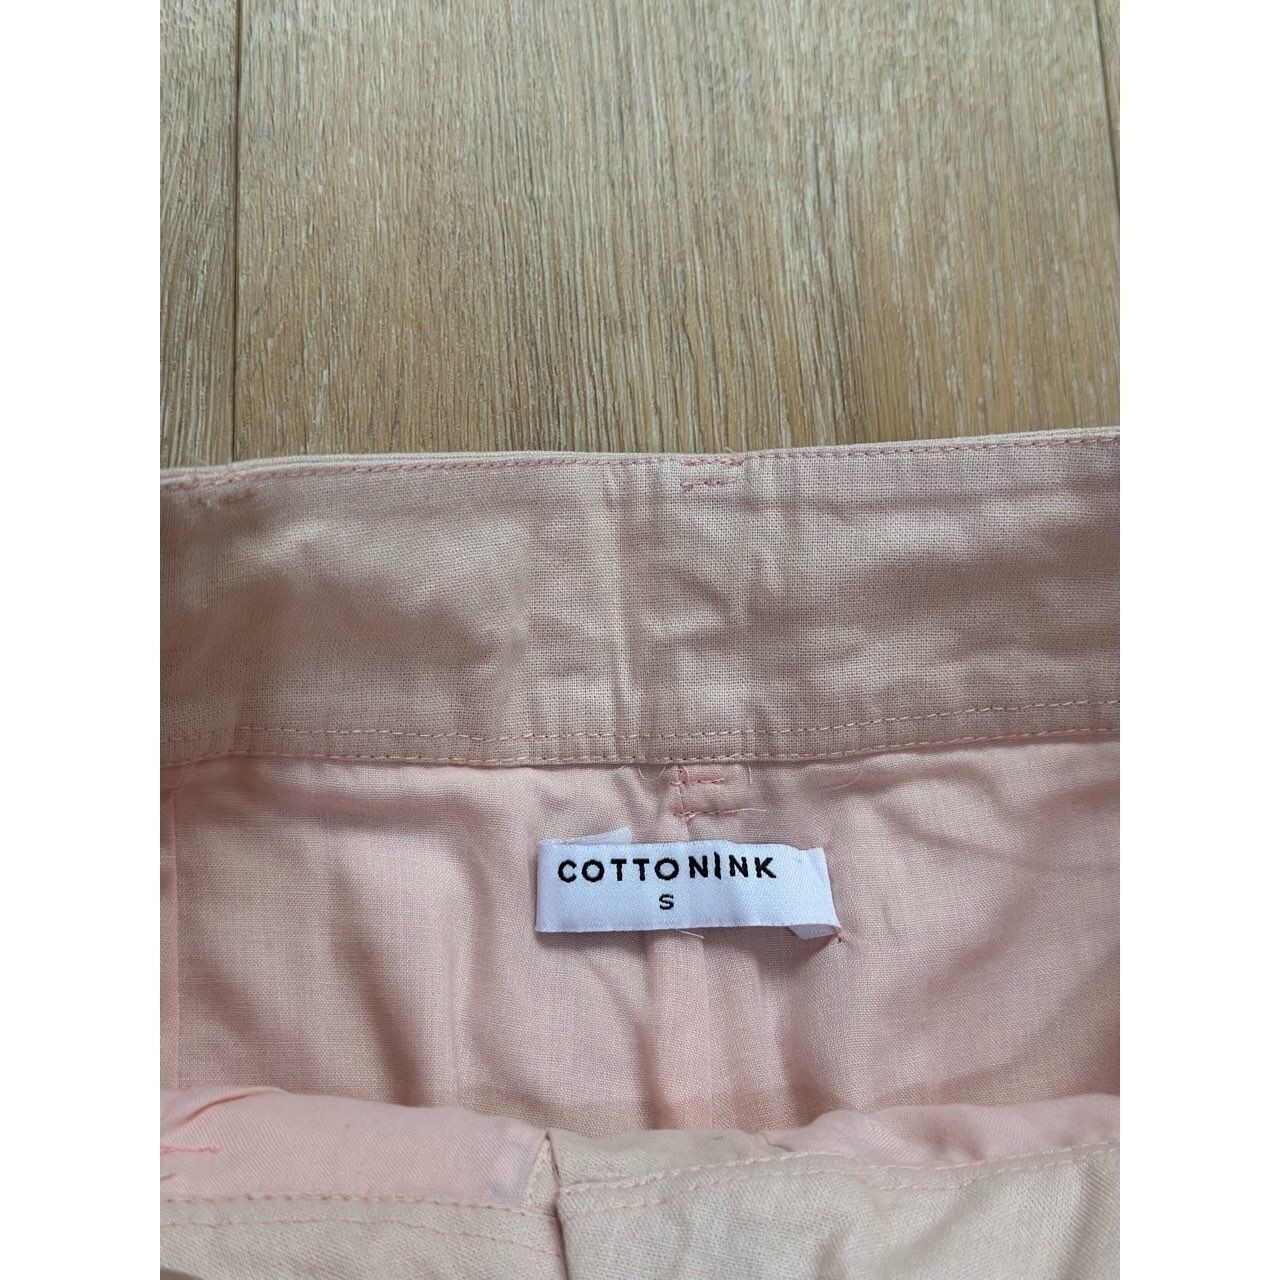 Cotton Ink Soft Pink Linen Long Pants